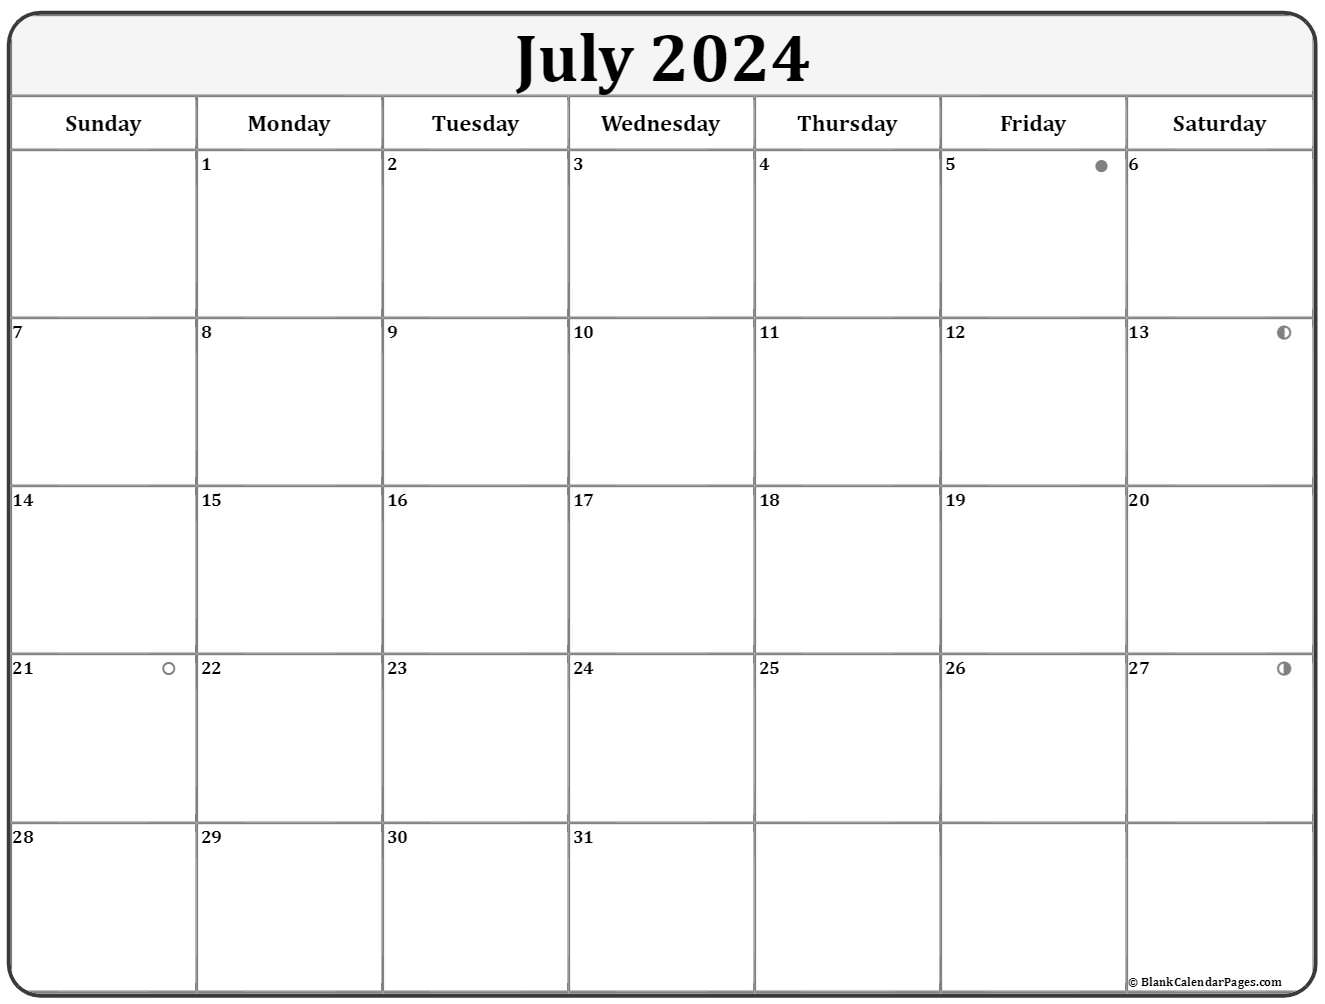 July 2022 Lunar Calendar Moon Phase Calendar